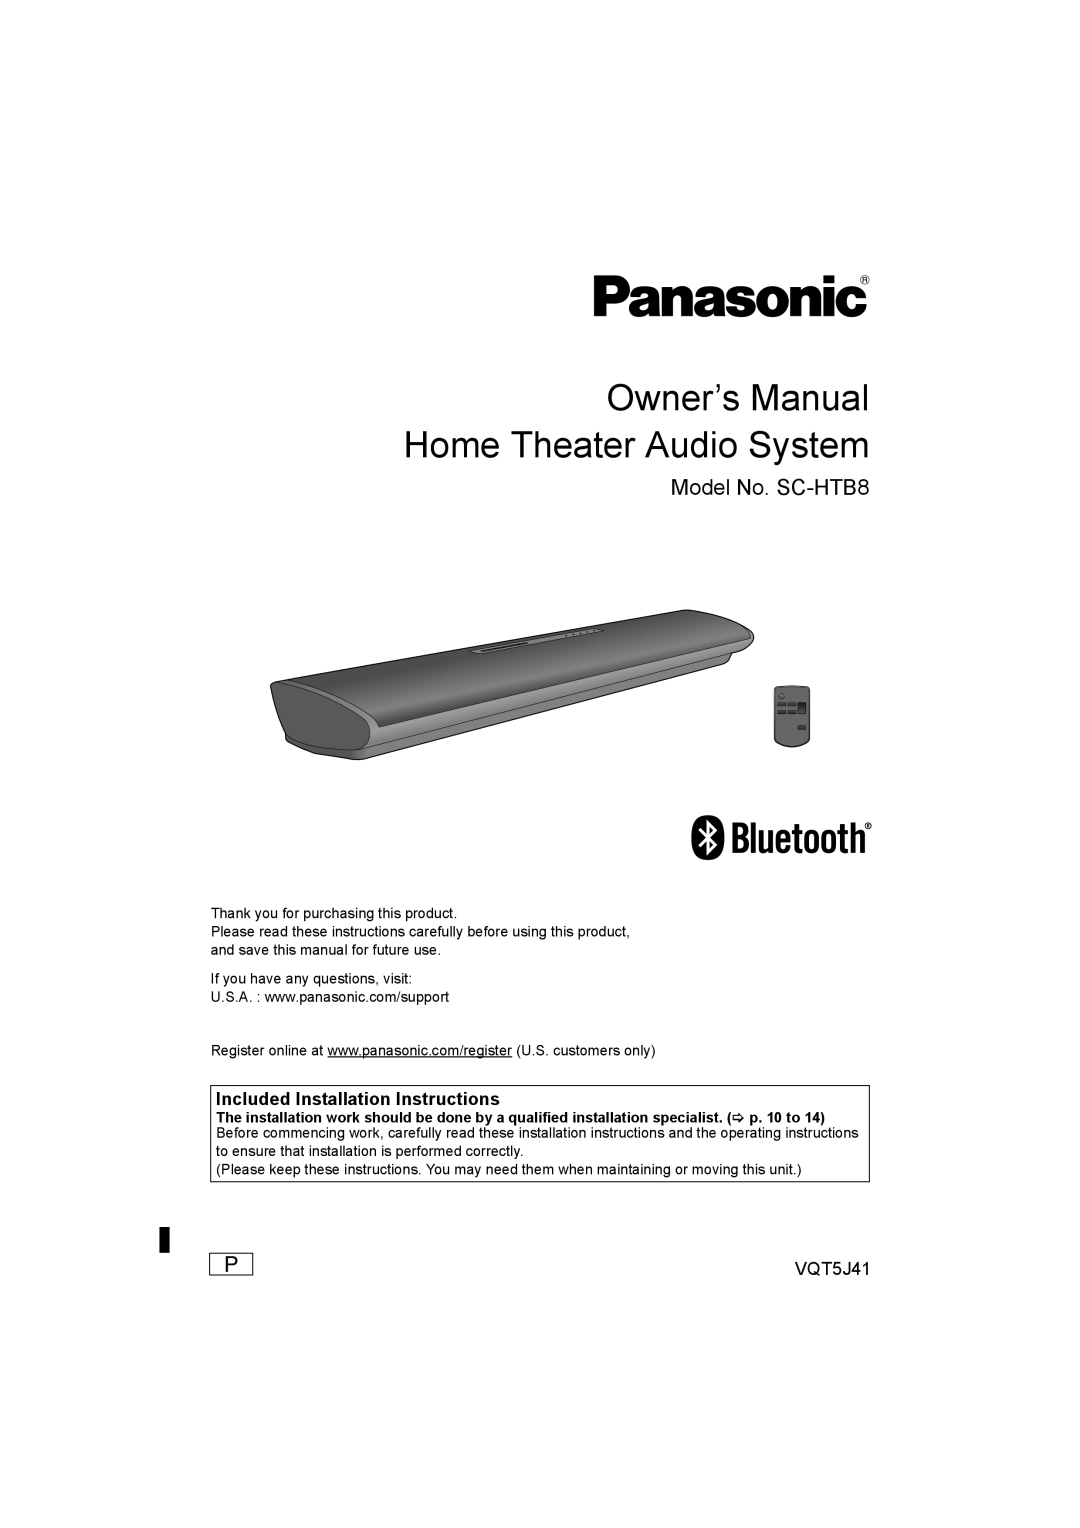 Panasonic owner manual Included Installation Instructions, VQT5J41, Model No. SC-HTB8 